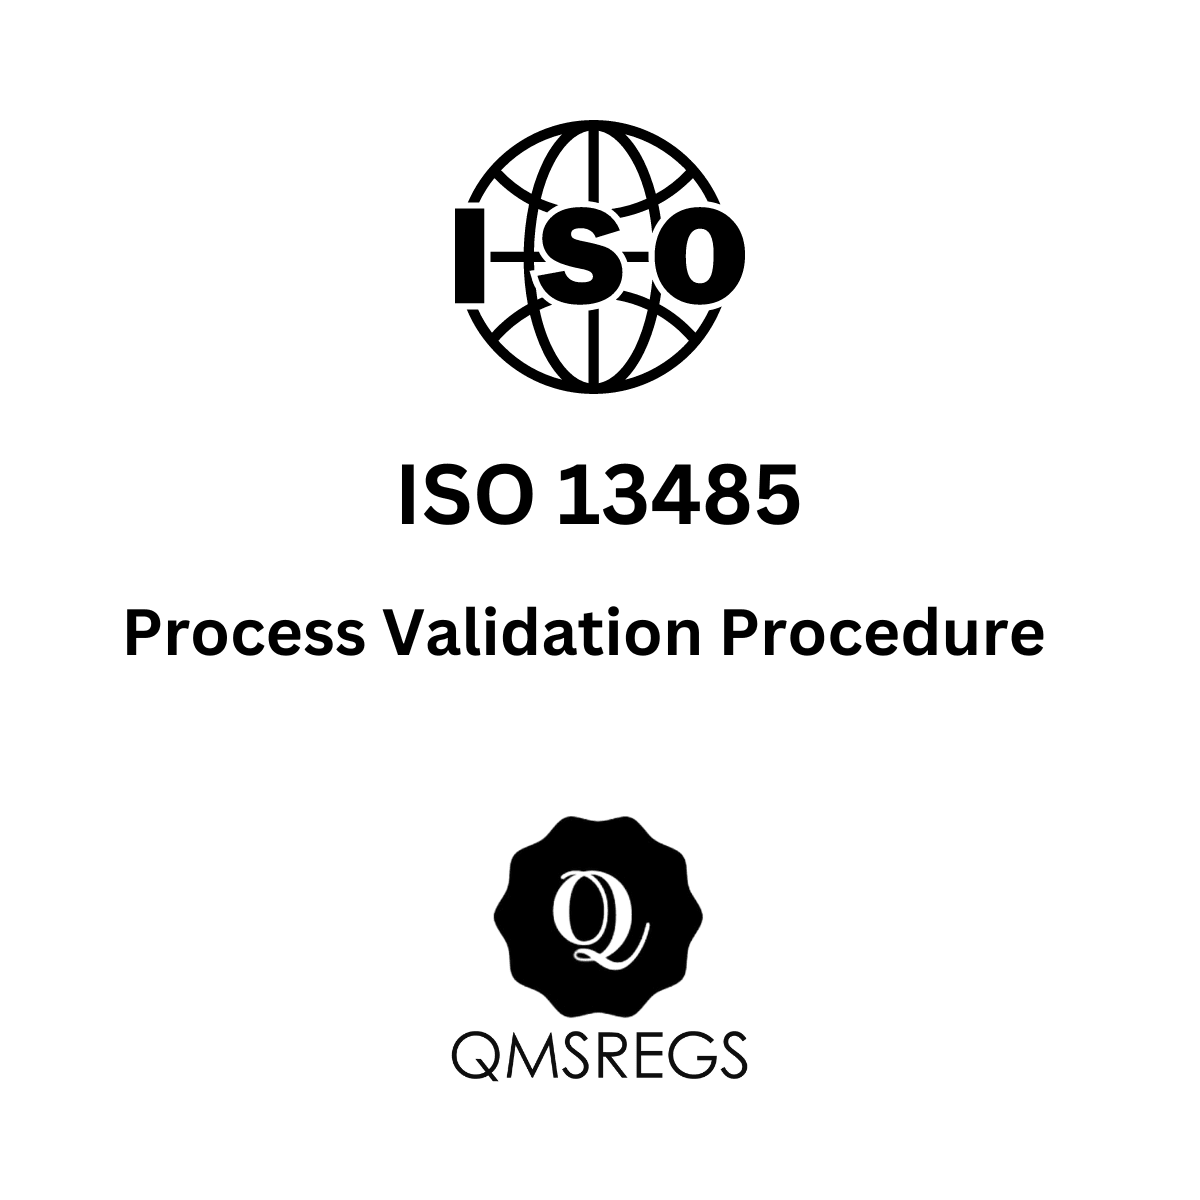 ISO 13485 Process Validation Procedure Template